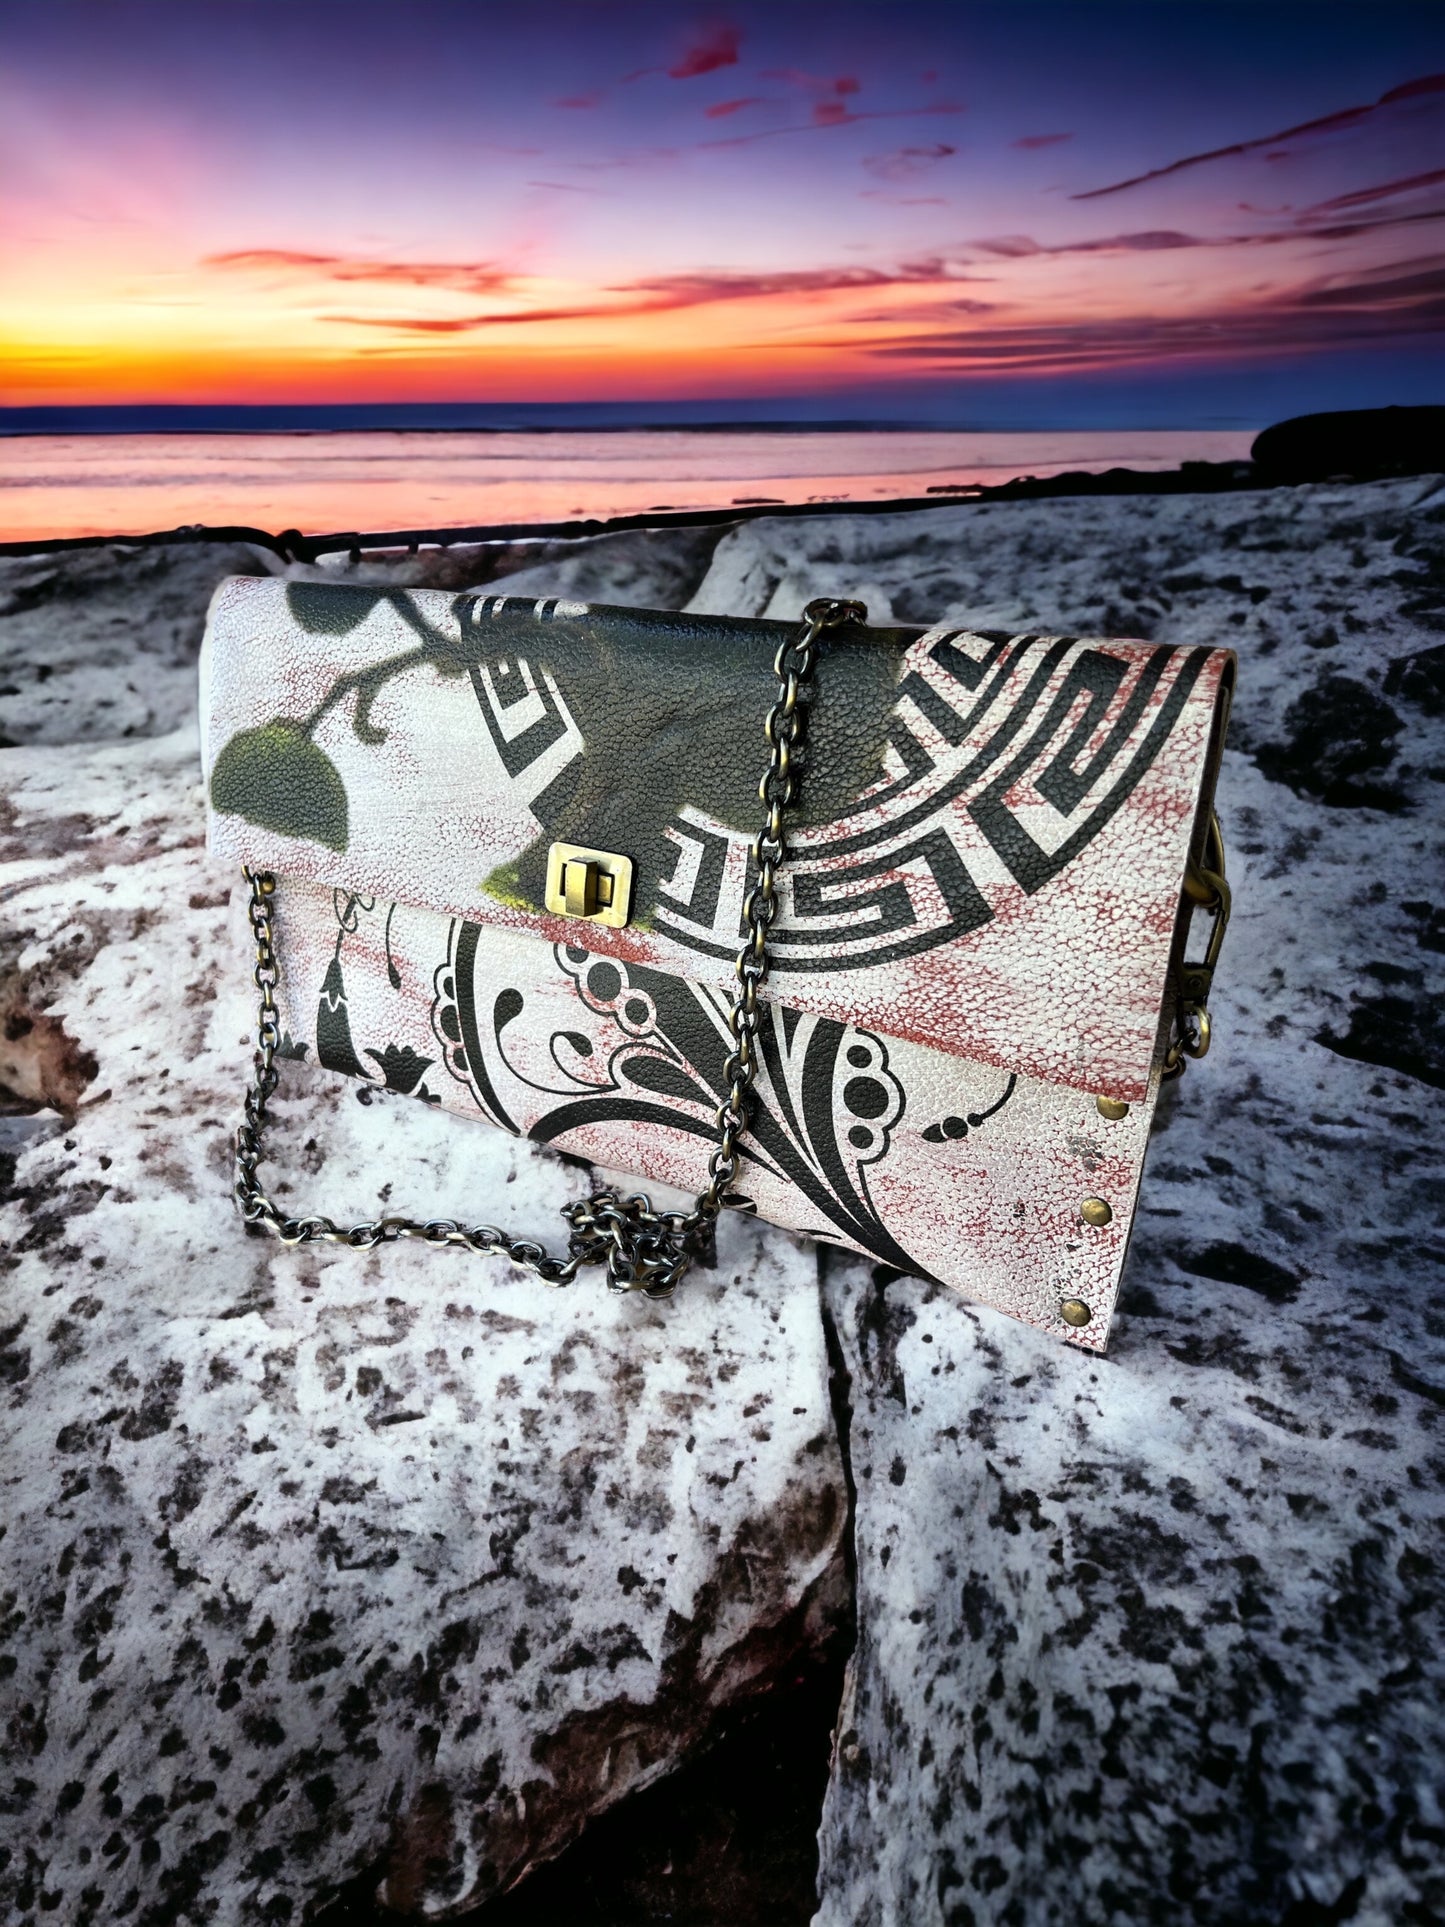 Greek Inspired Painted Clutch Bag